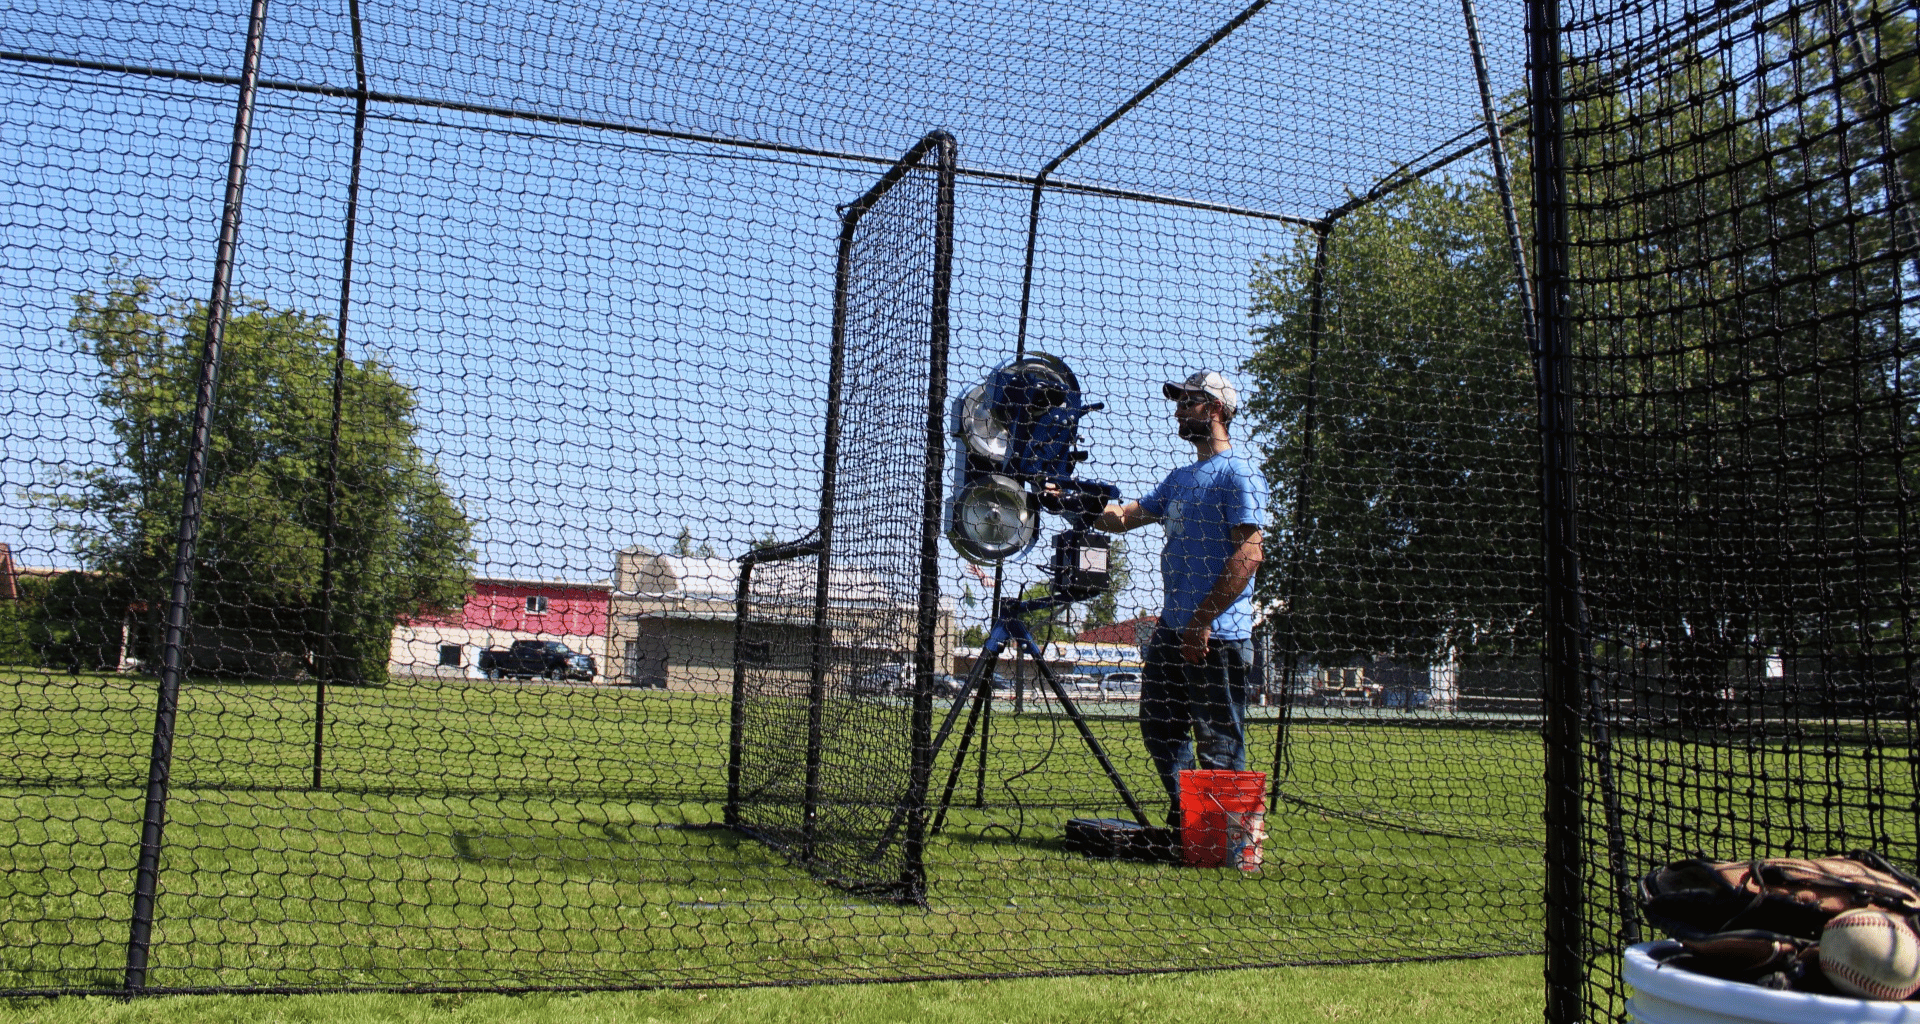 Man feeding the bata 2 pitch 3 pitching machine inside the Trapezoid batting cage